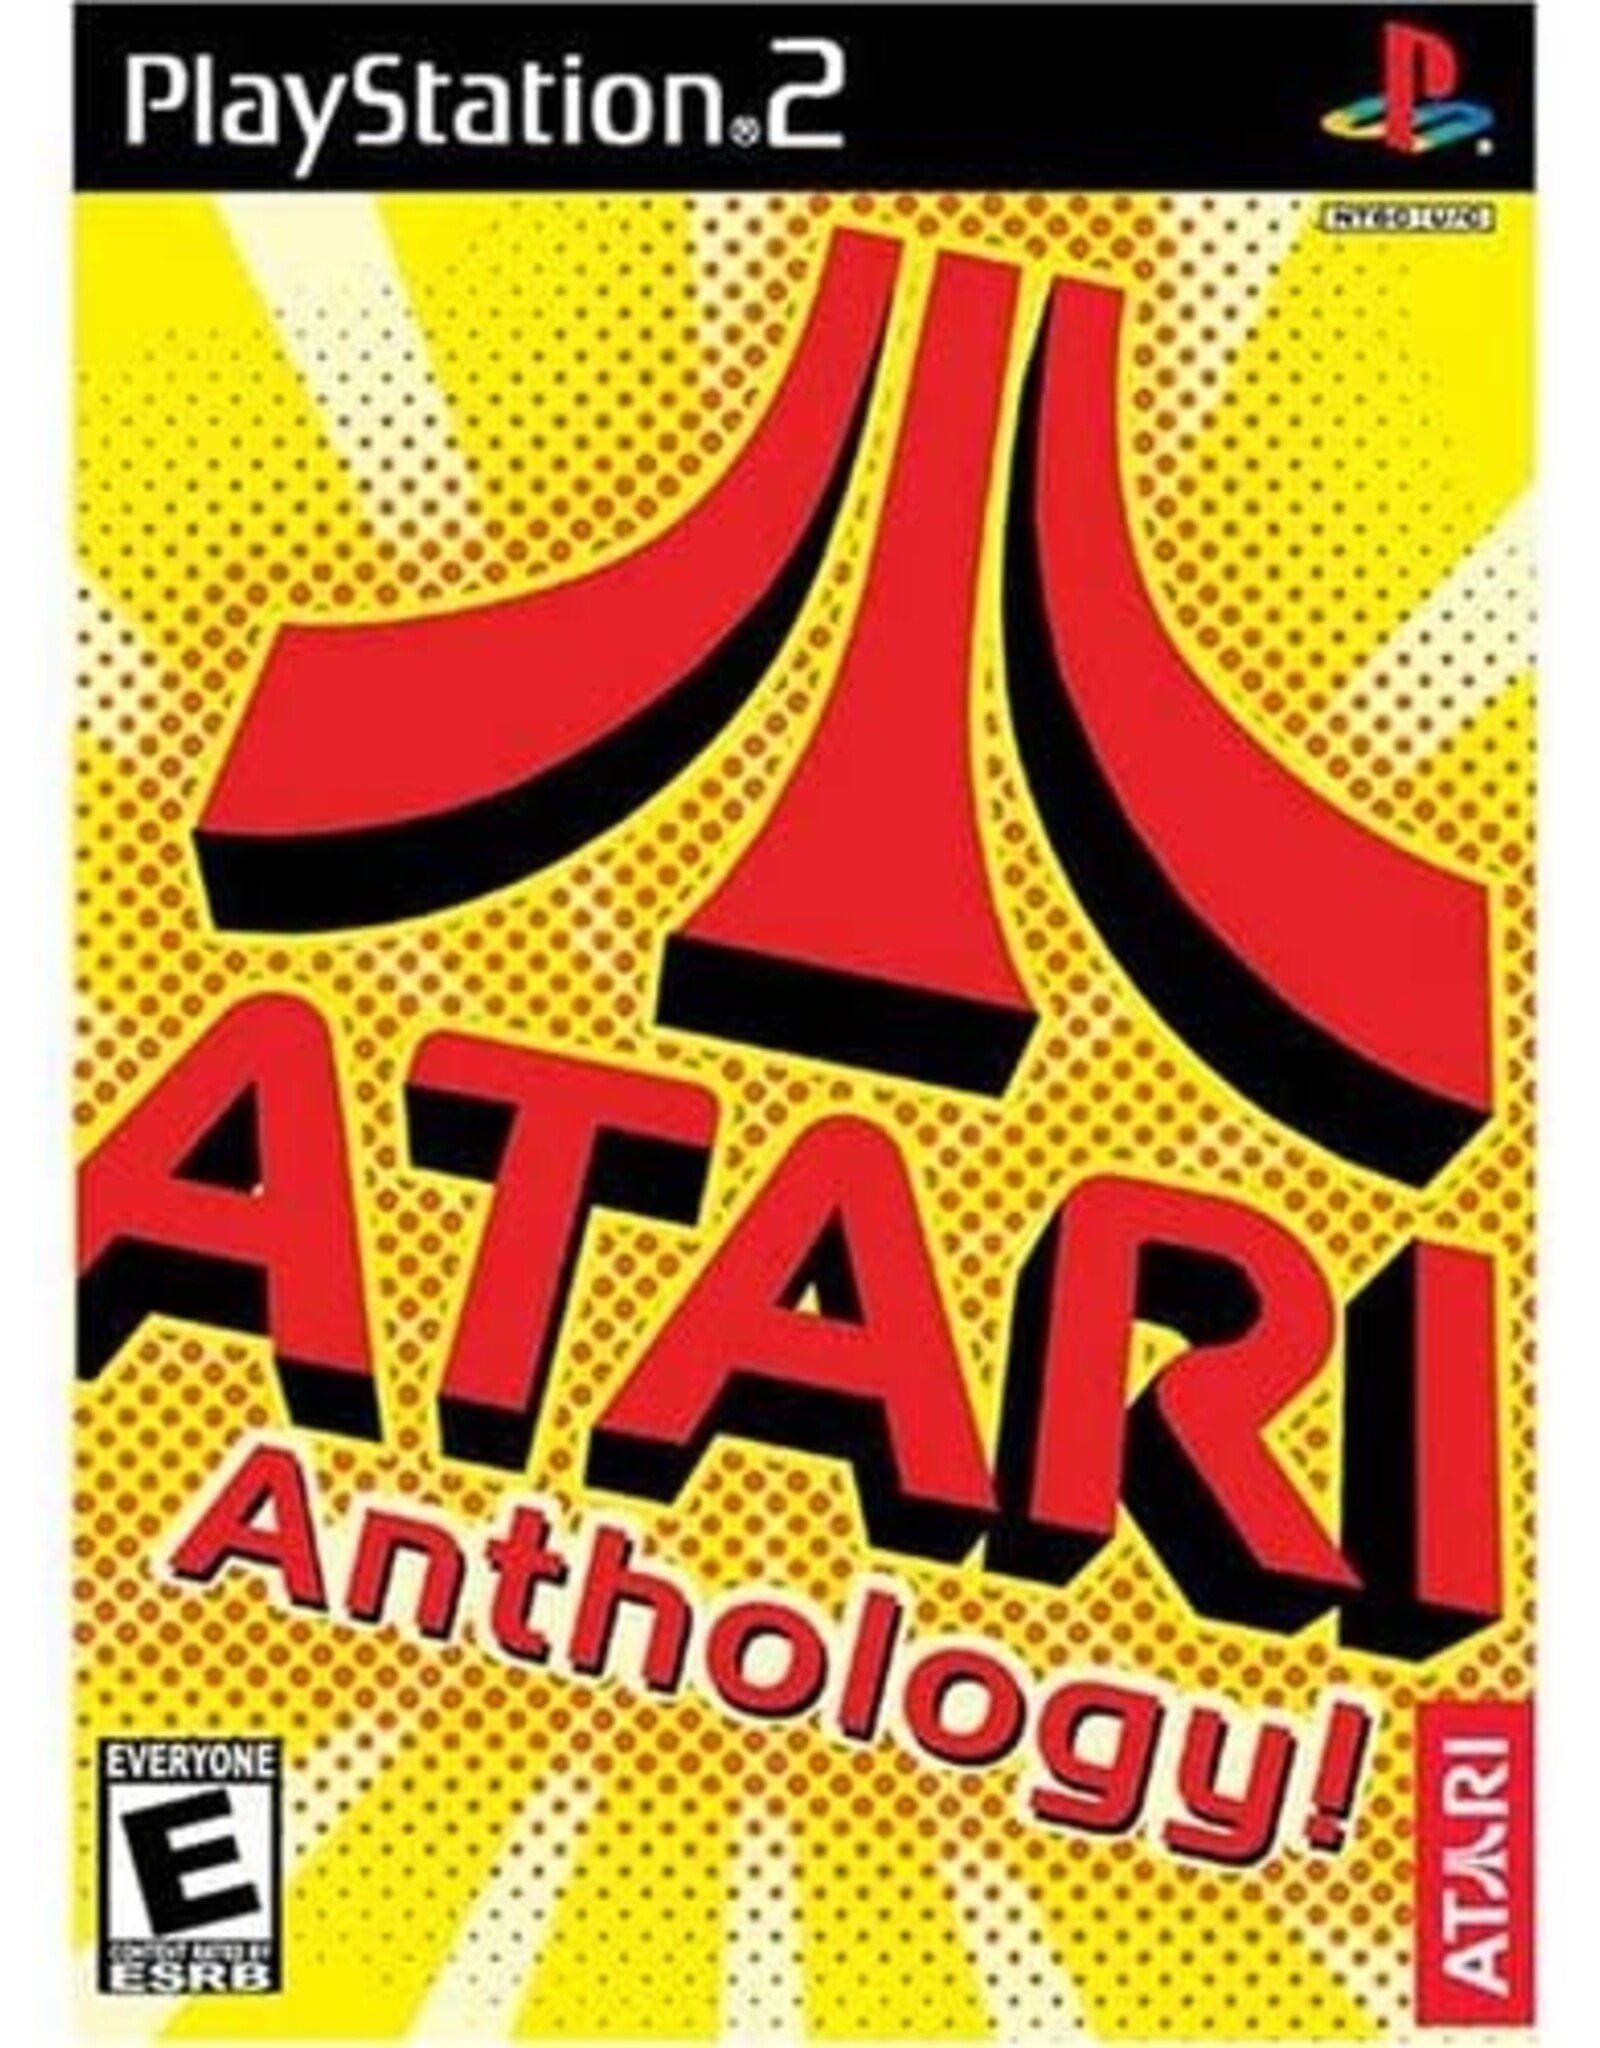 Playstation 2 Atari Anthology (CiB, Sticker on Sleeve)